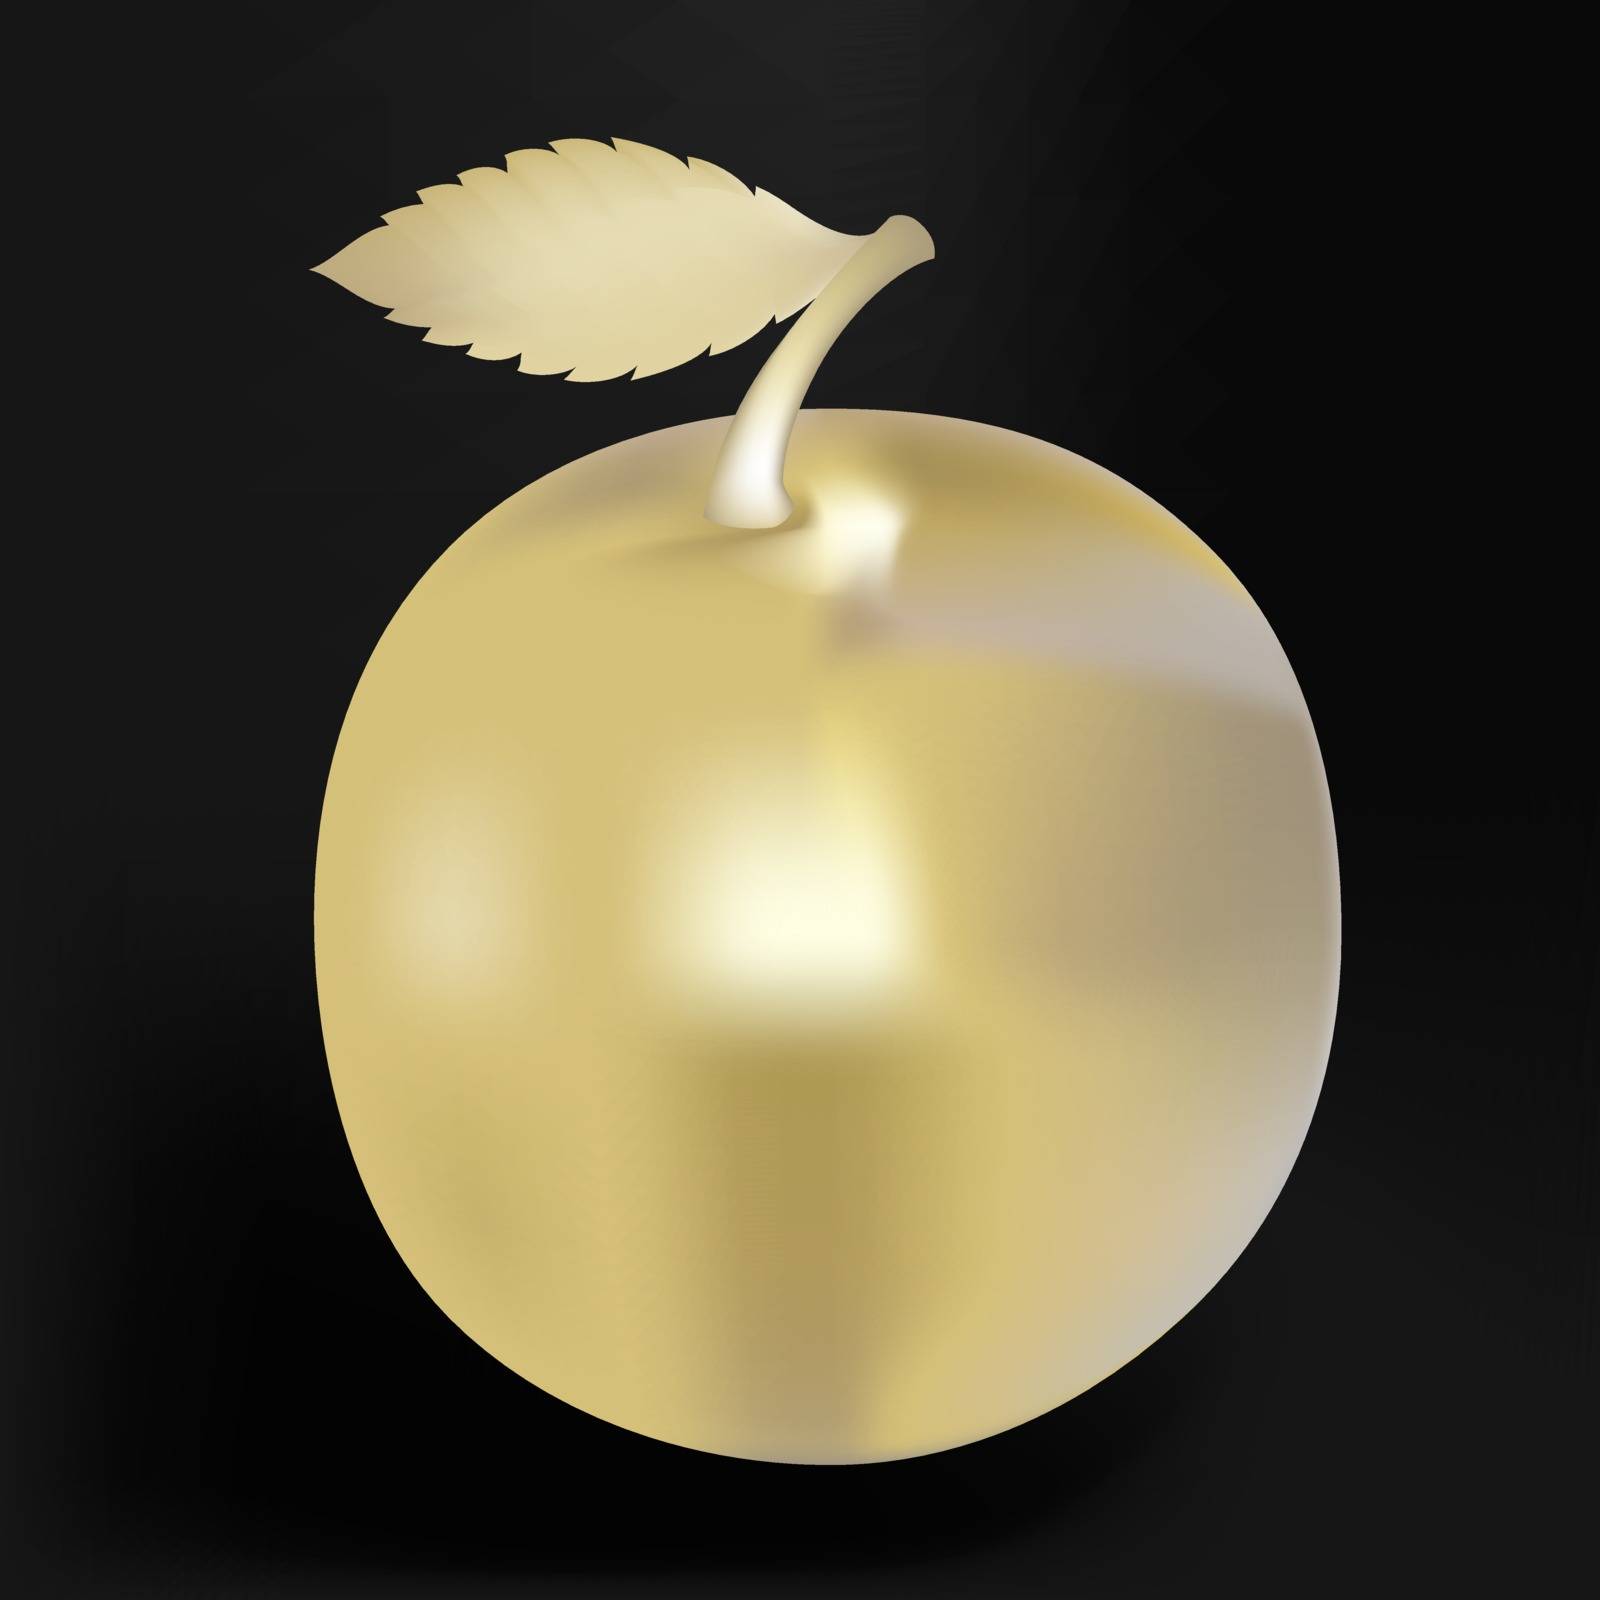 Golden apple by serebrov